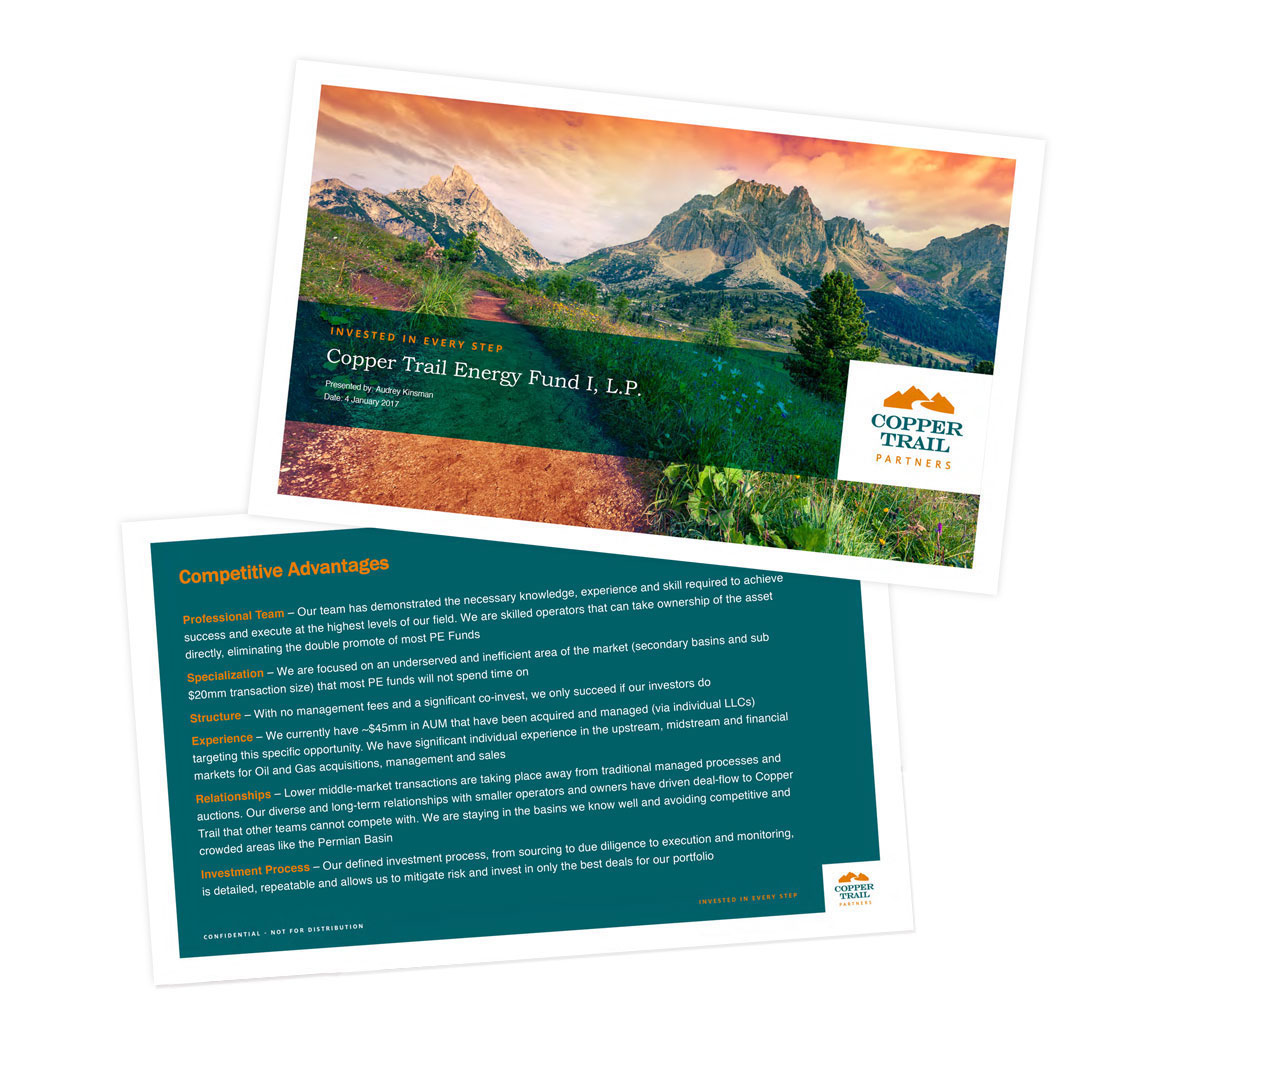 copper trail partners case study